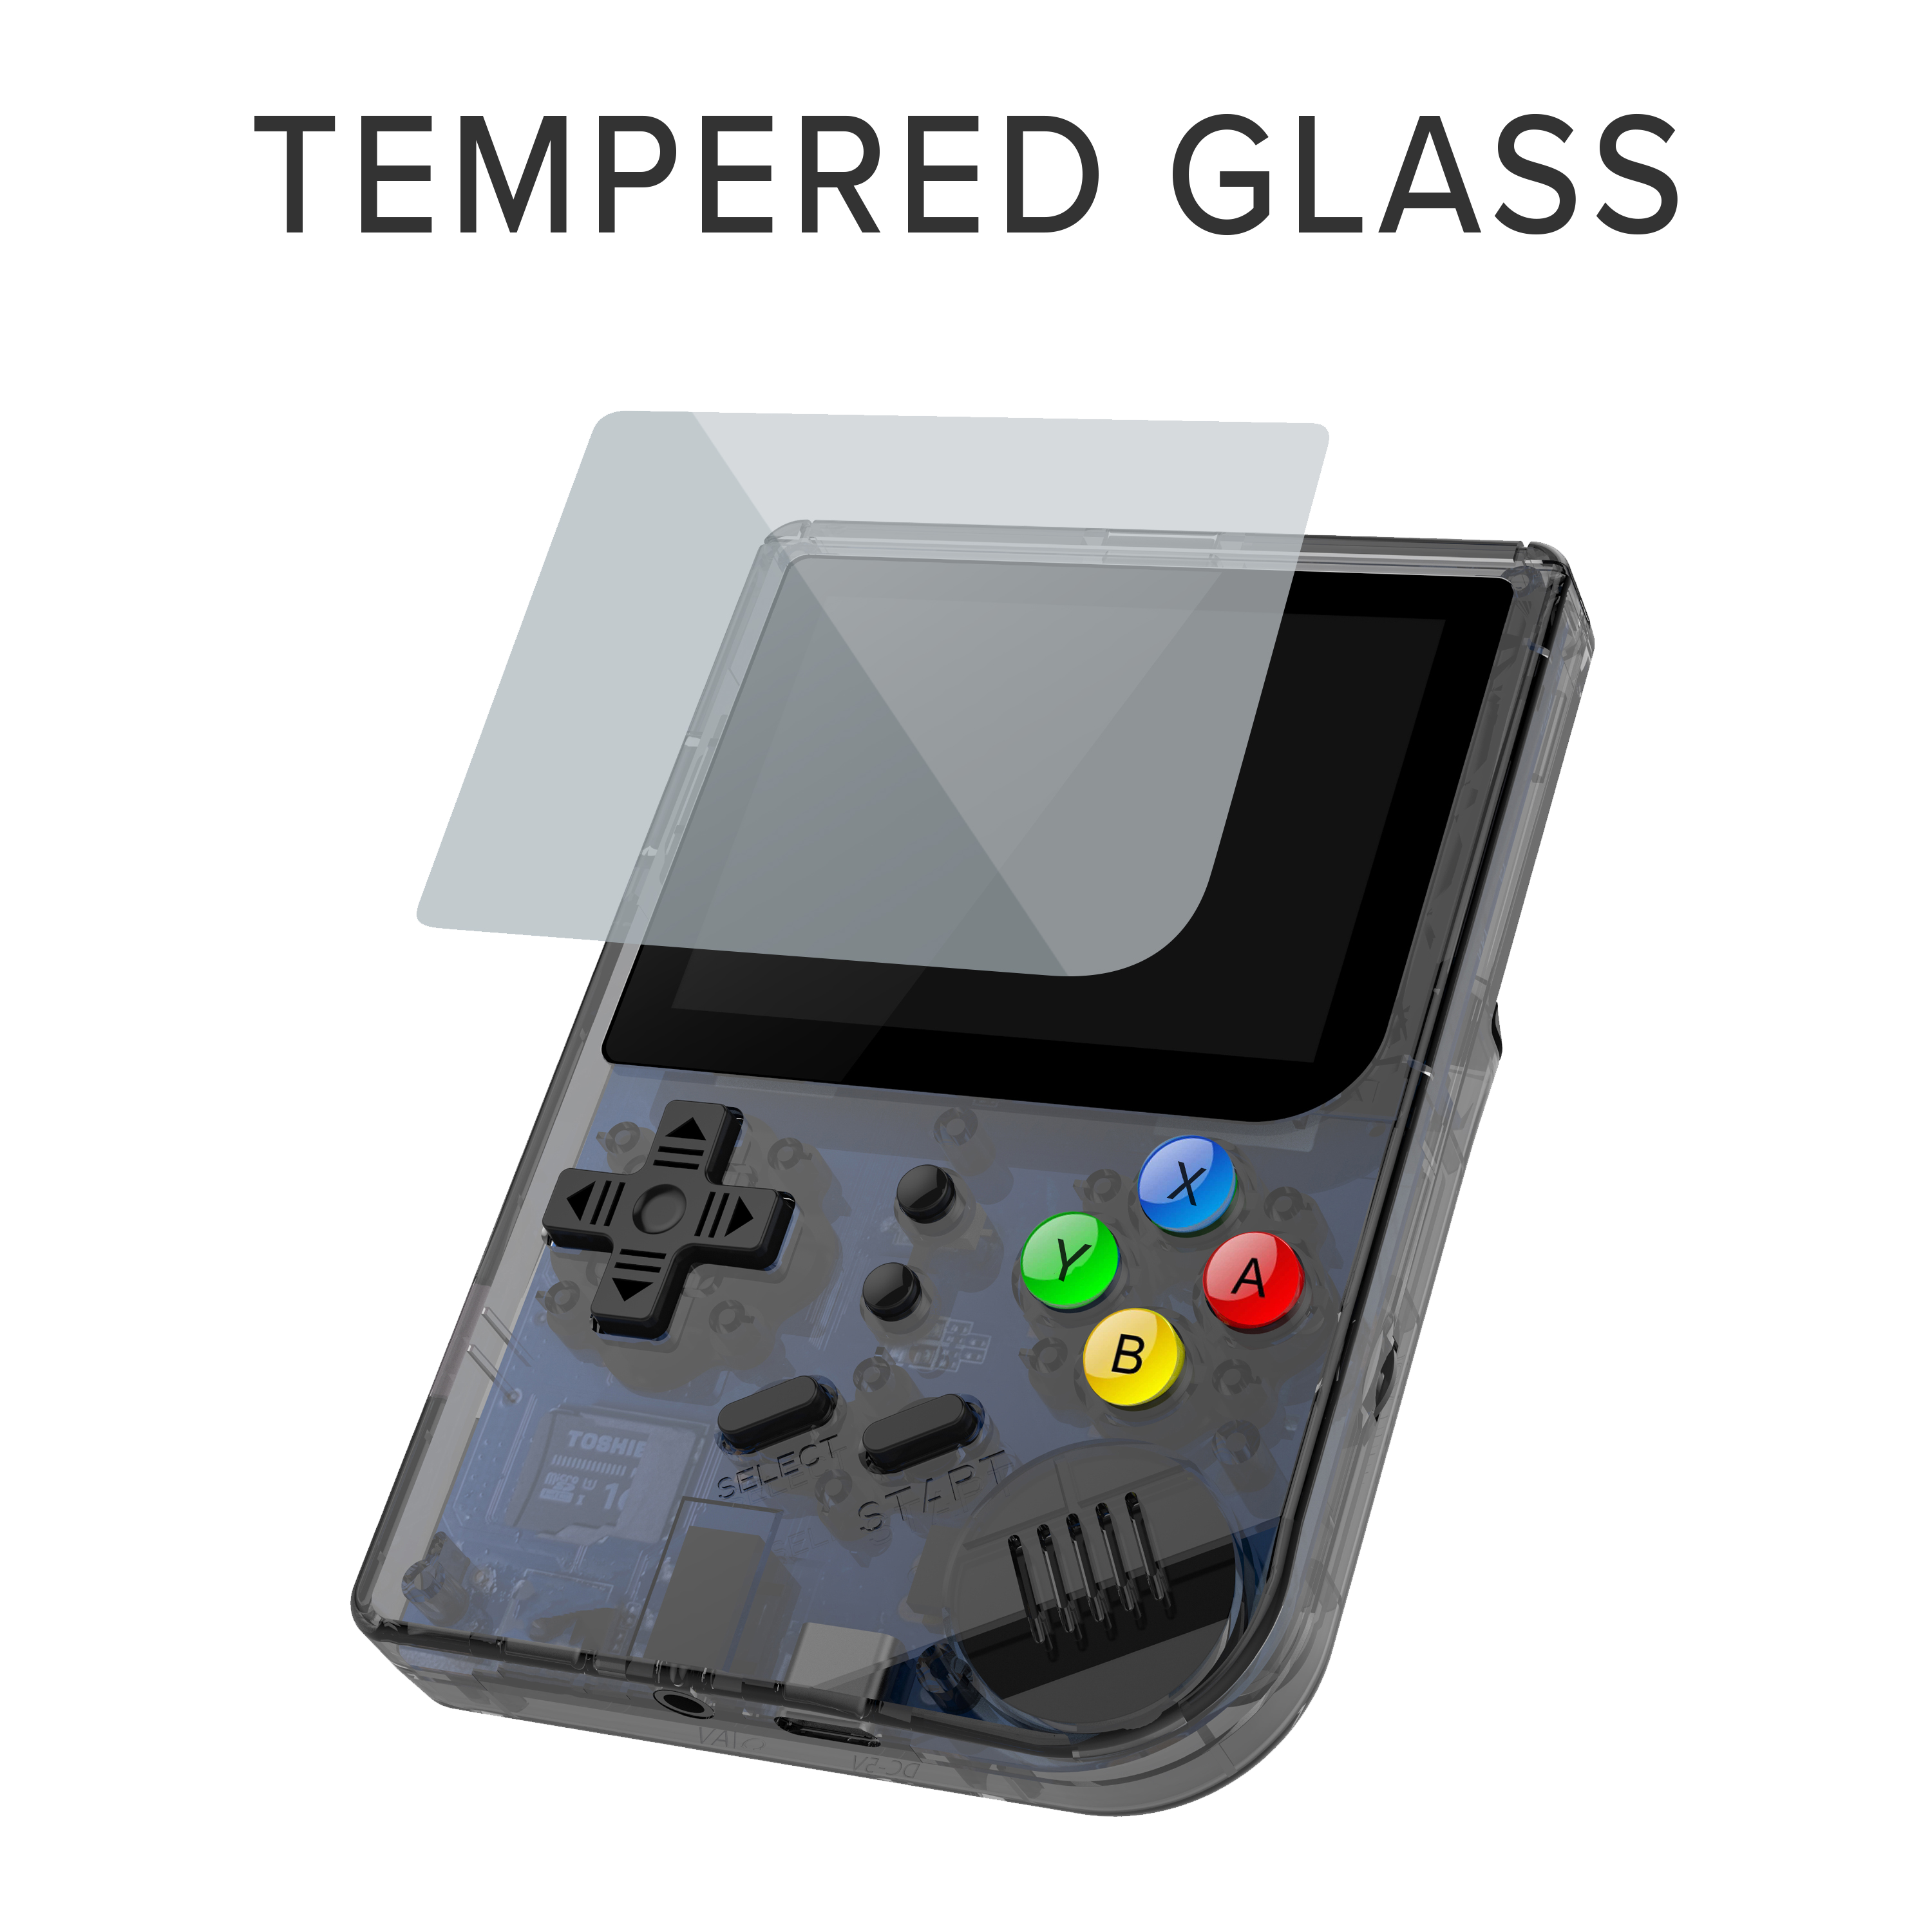 RG300 OpenDingux Retro Gaming Portable Handheld - Transparent Showcasing Tempered Glass